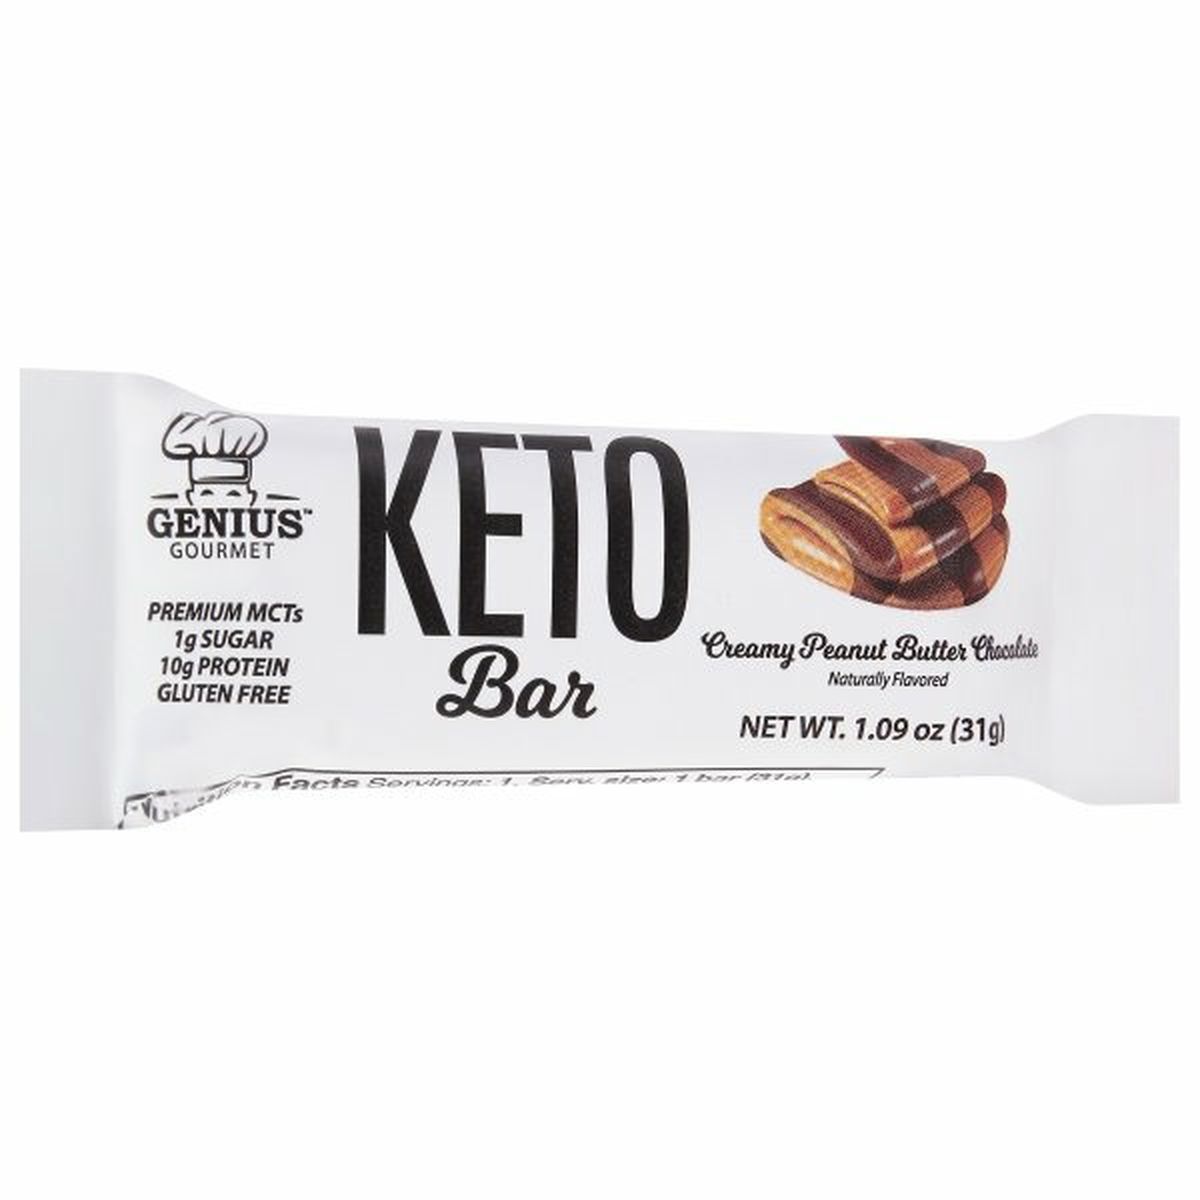 Calories in Genius Gourmet Keto Bar, Creamy Peanut Butter Chocolate